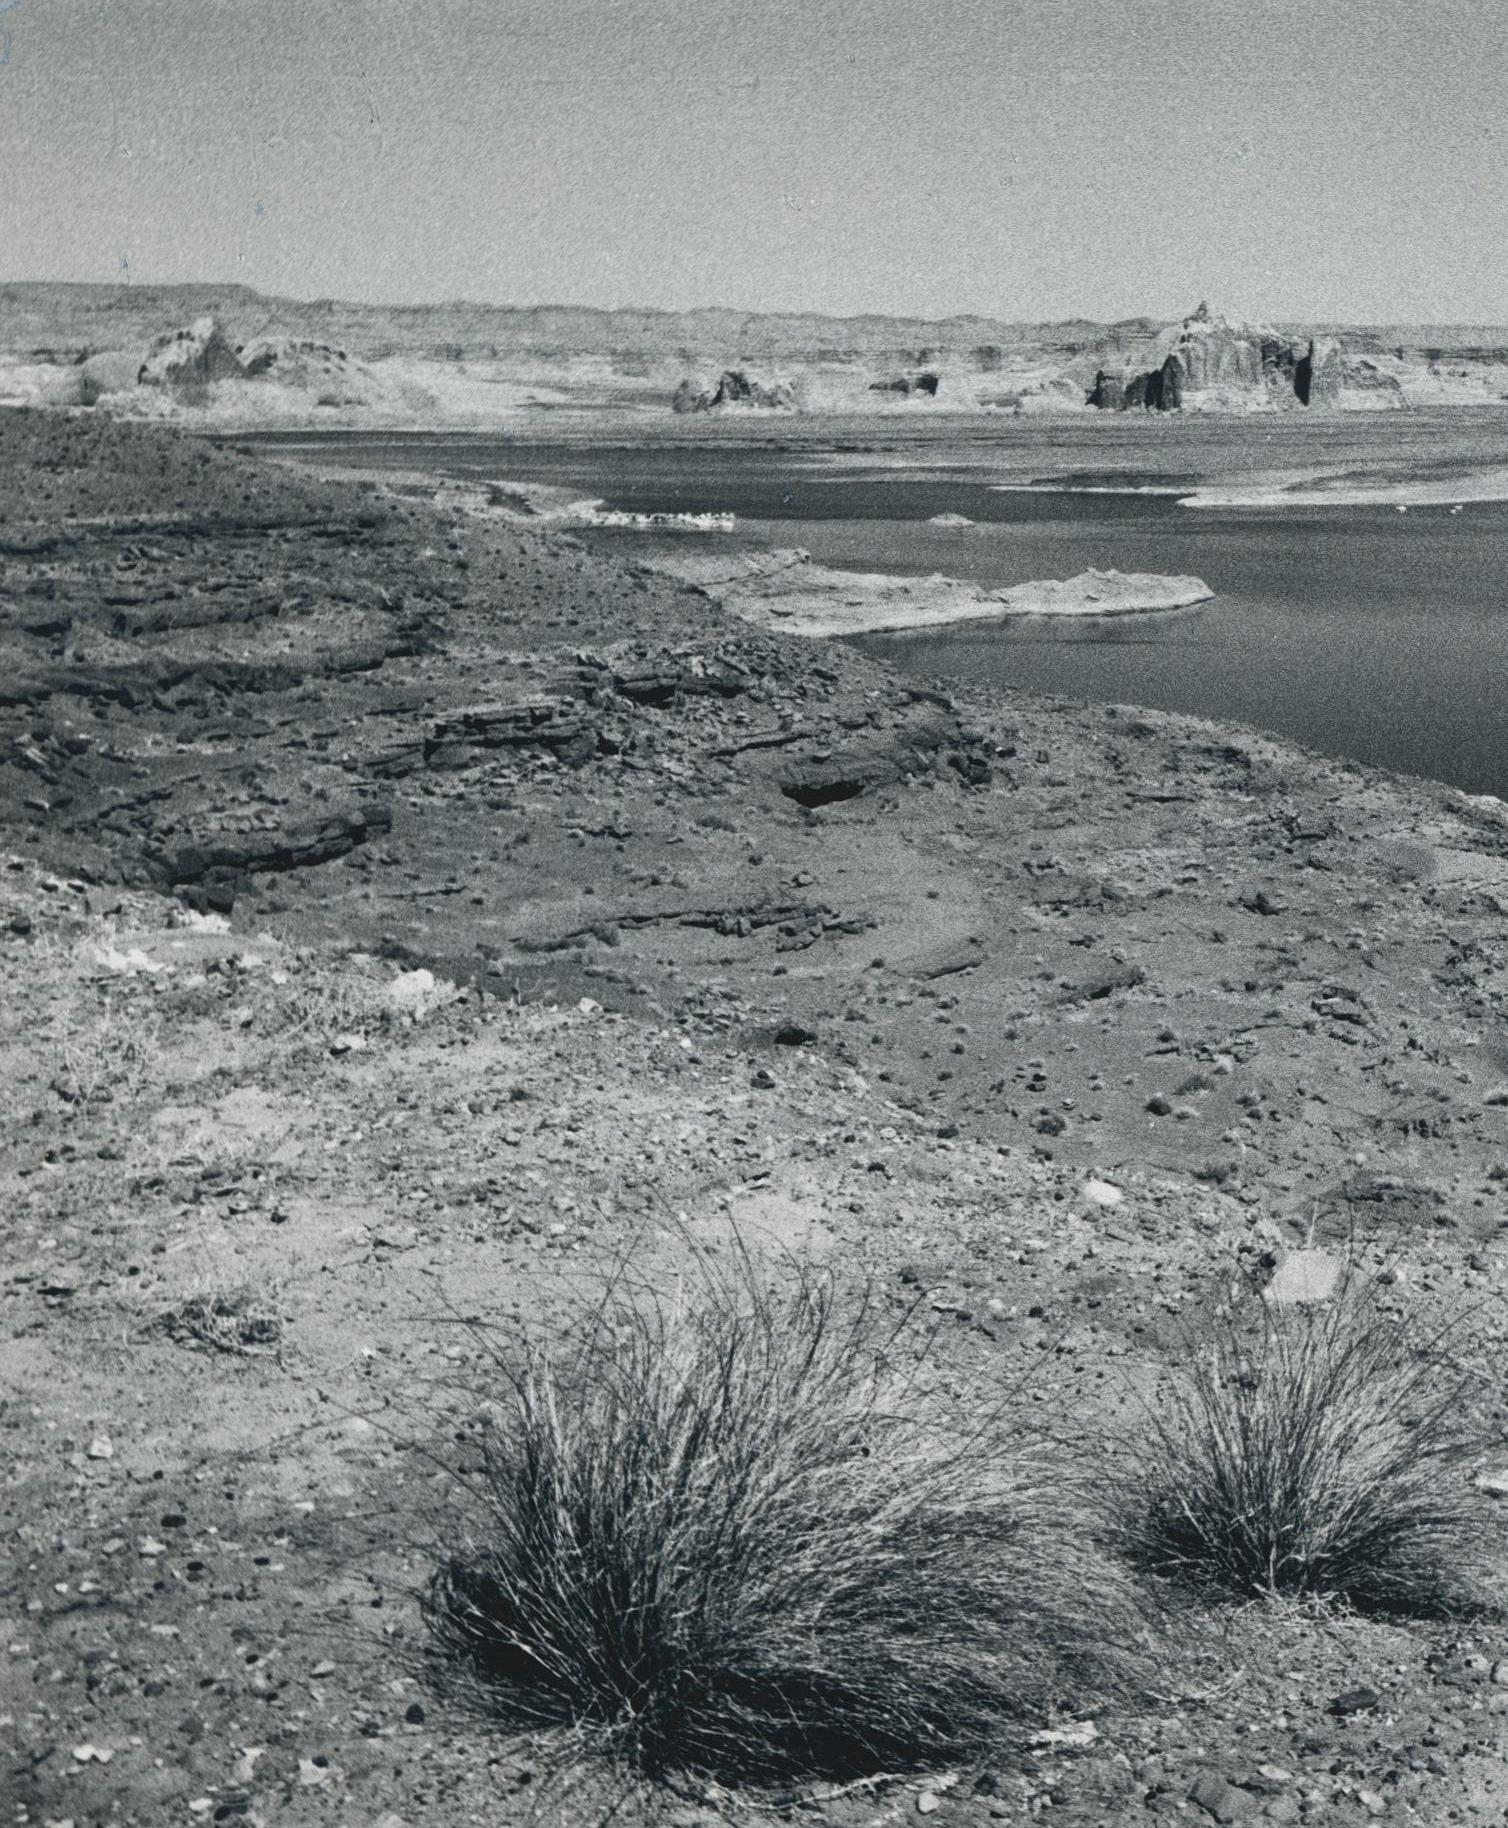 Lake Powell, Utah/Arizona, Black and White, USA 1960s, 15, 7 x 23, 3 cm - Modern Photograph by Erich Andres